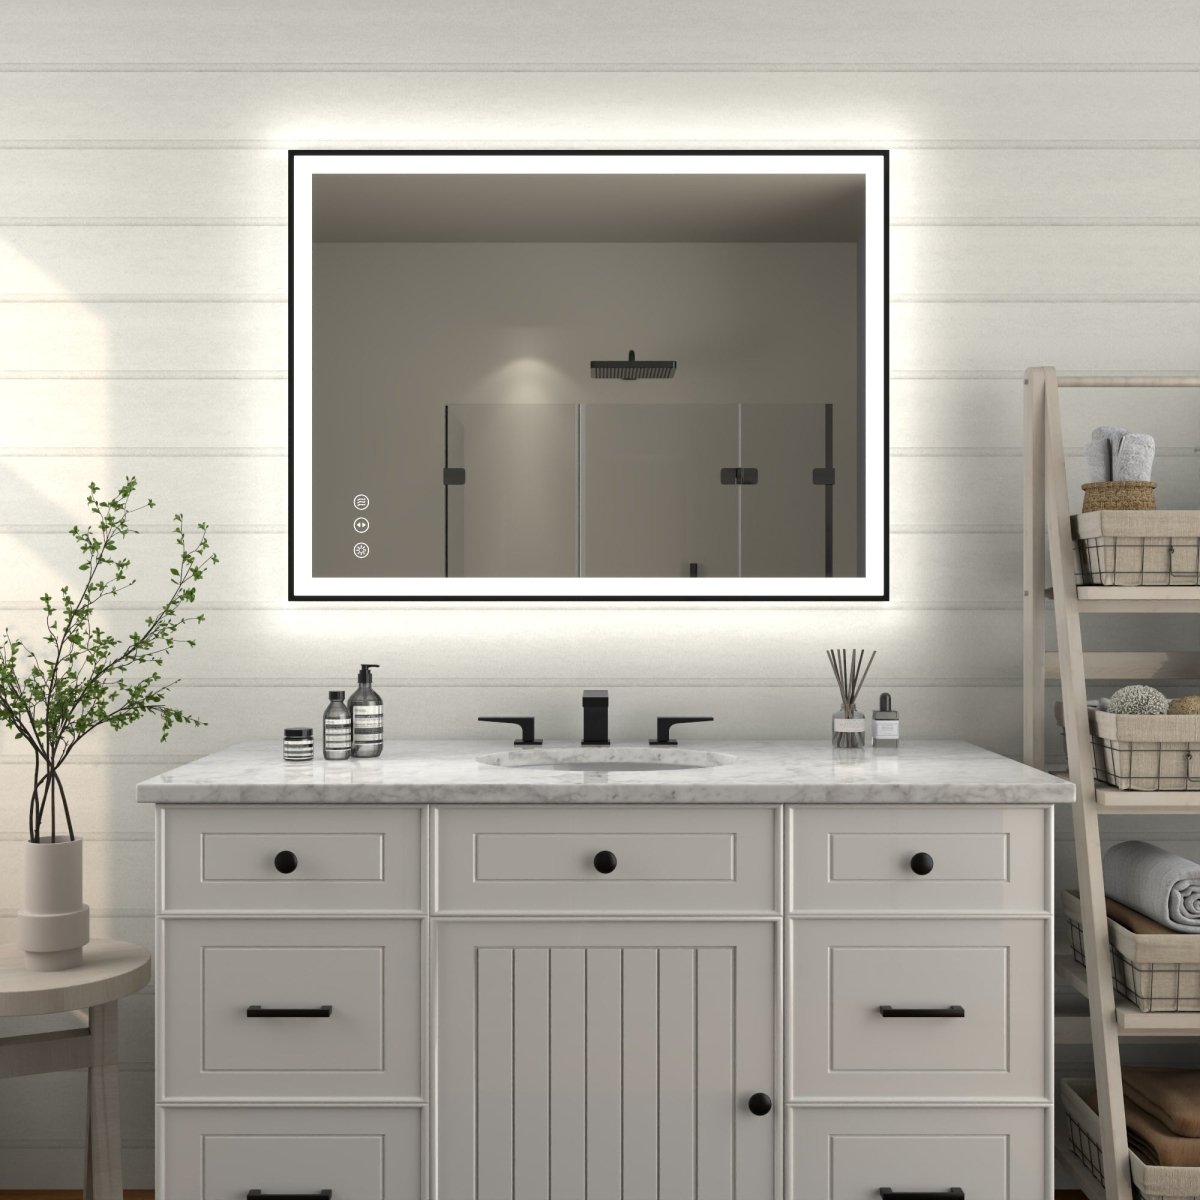 Apex - Noir 40"x30" Framed LED Lighted Bathroom Mirror